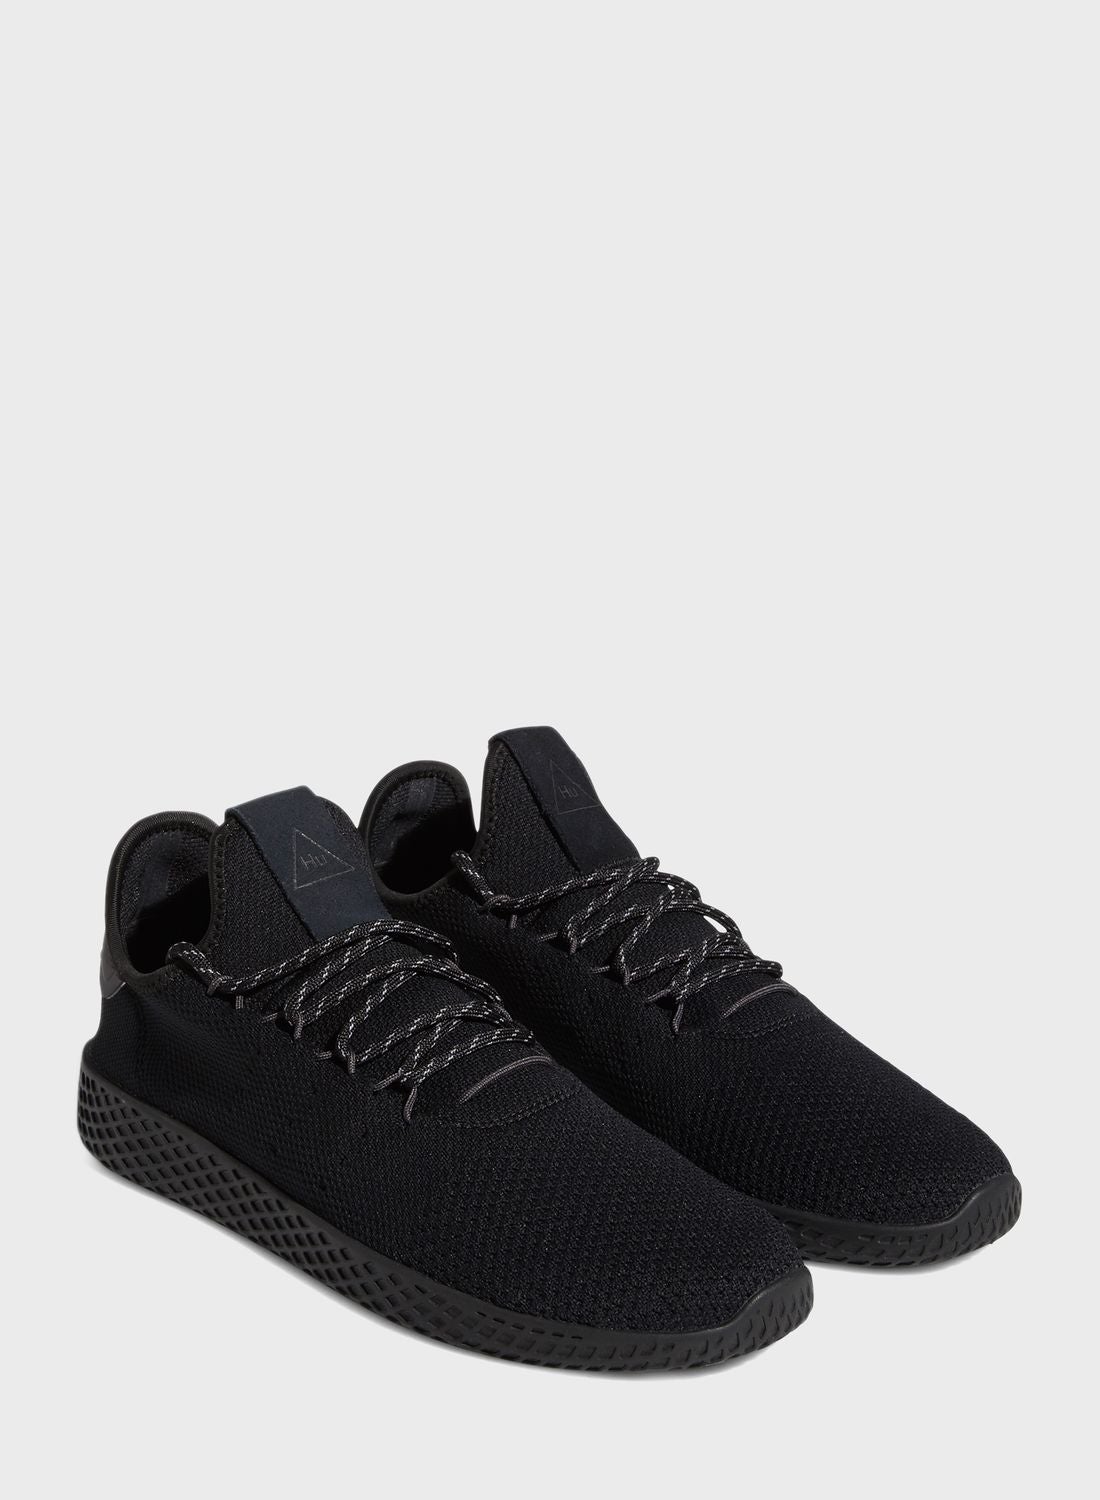 adidas Originals Pharrell Williams Tennis HU Shoes in Black Knit